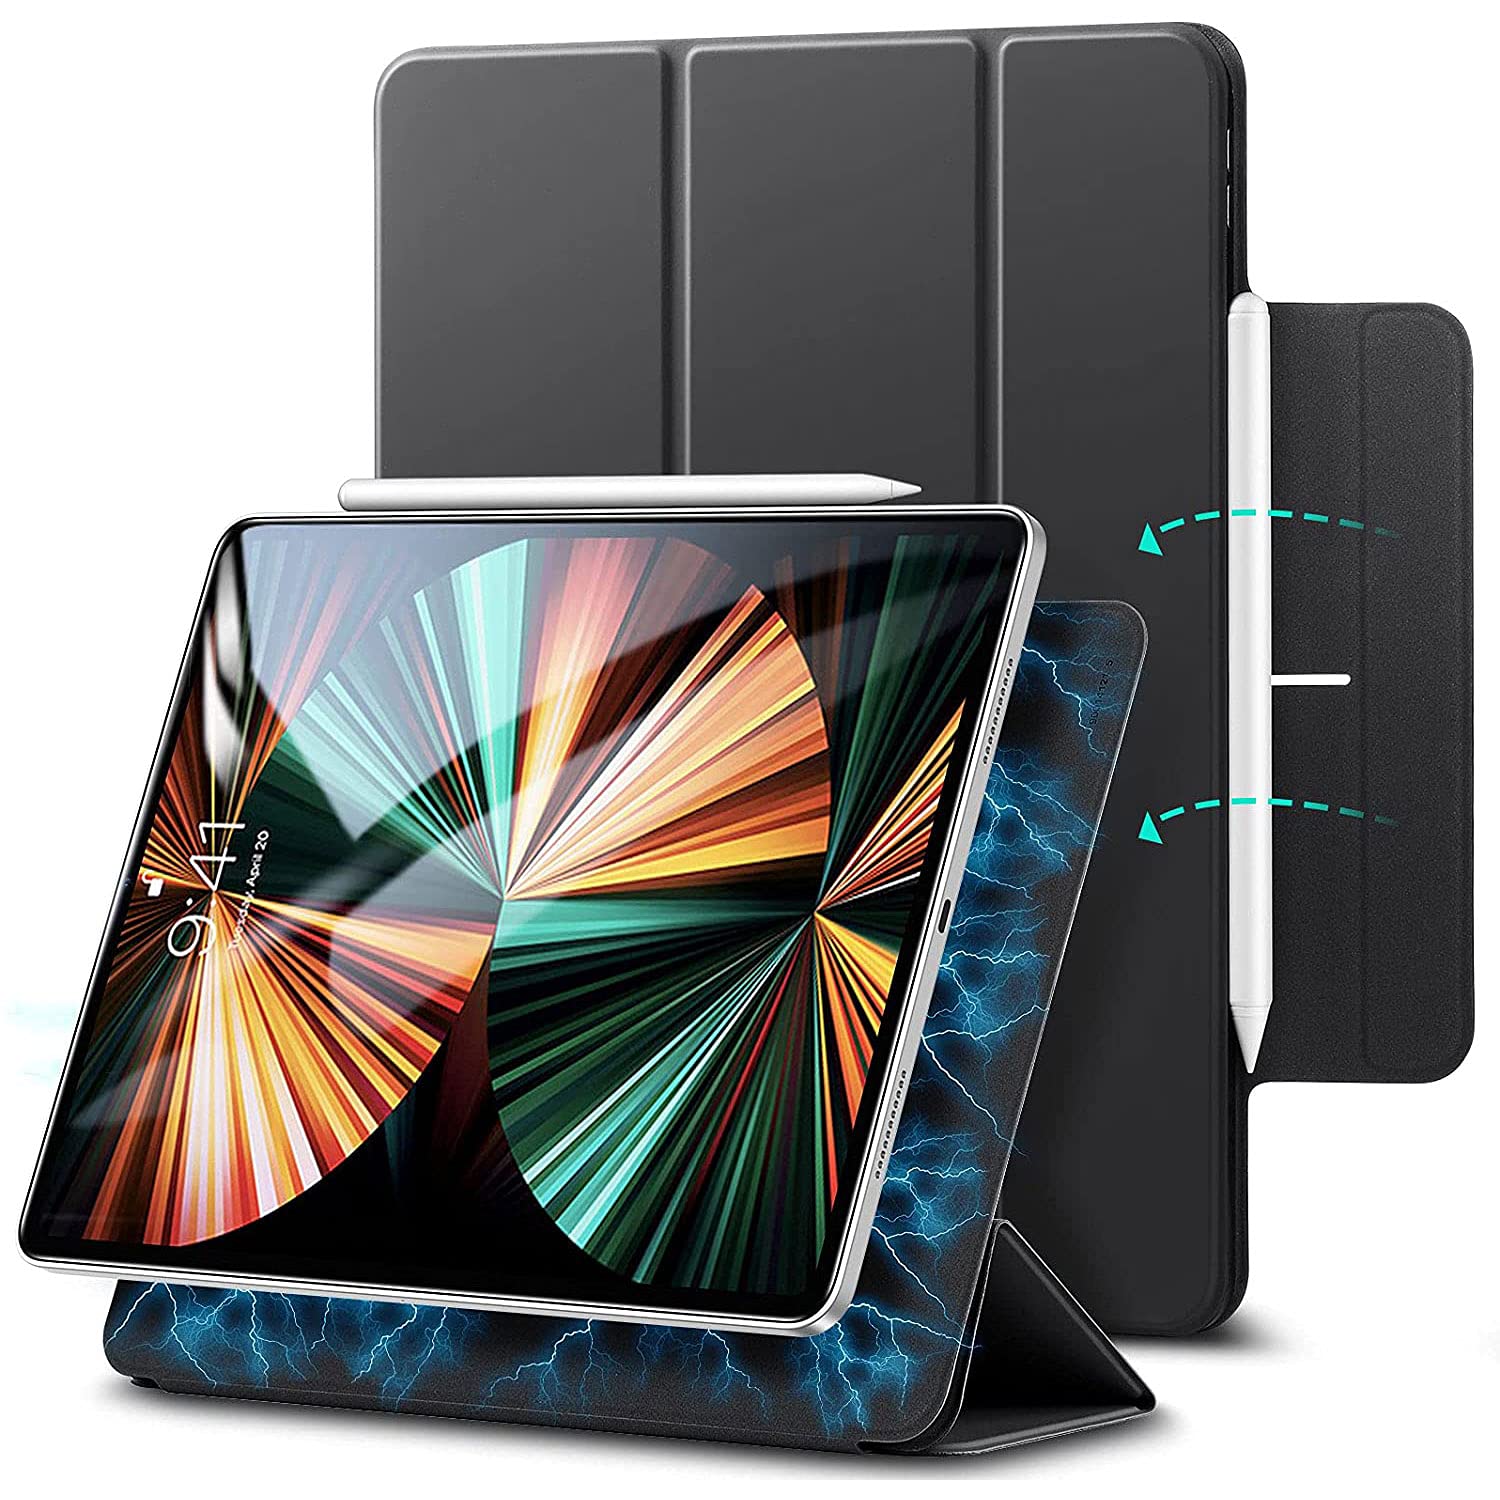 Arktis iPad Pro Hülle, Smart Case kompatibel mit iPad Pro 12,9" (2021) [Sleep & Wake-Up-Funktion] Schutzhülle Smart Cover Case schwarz